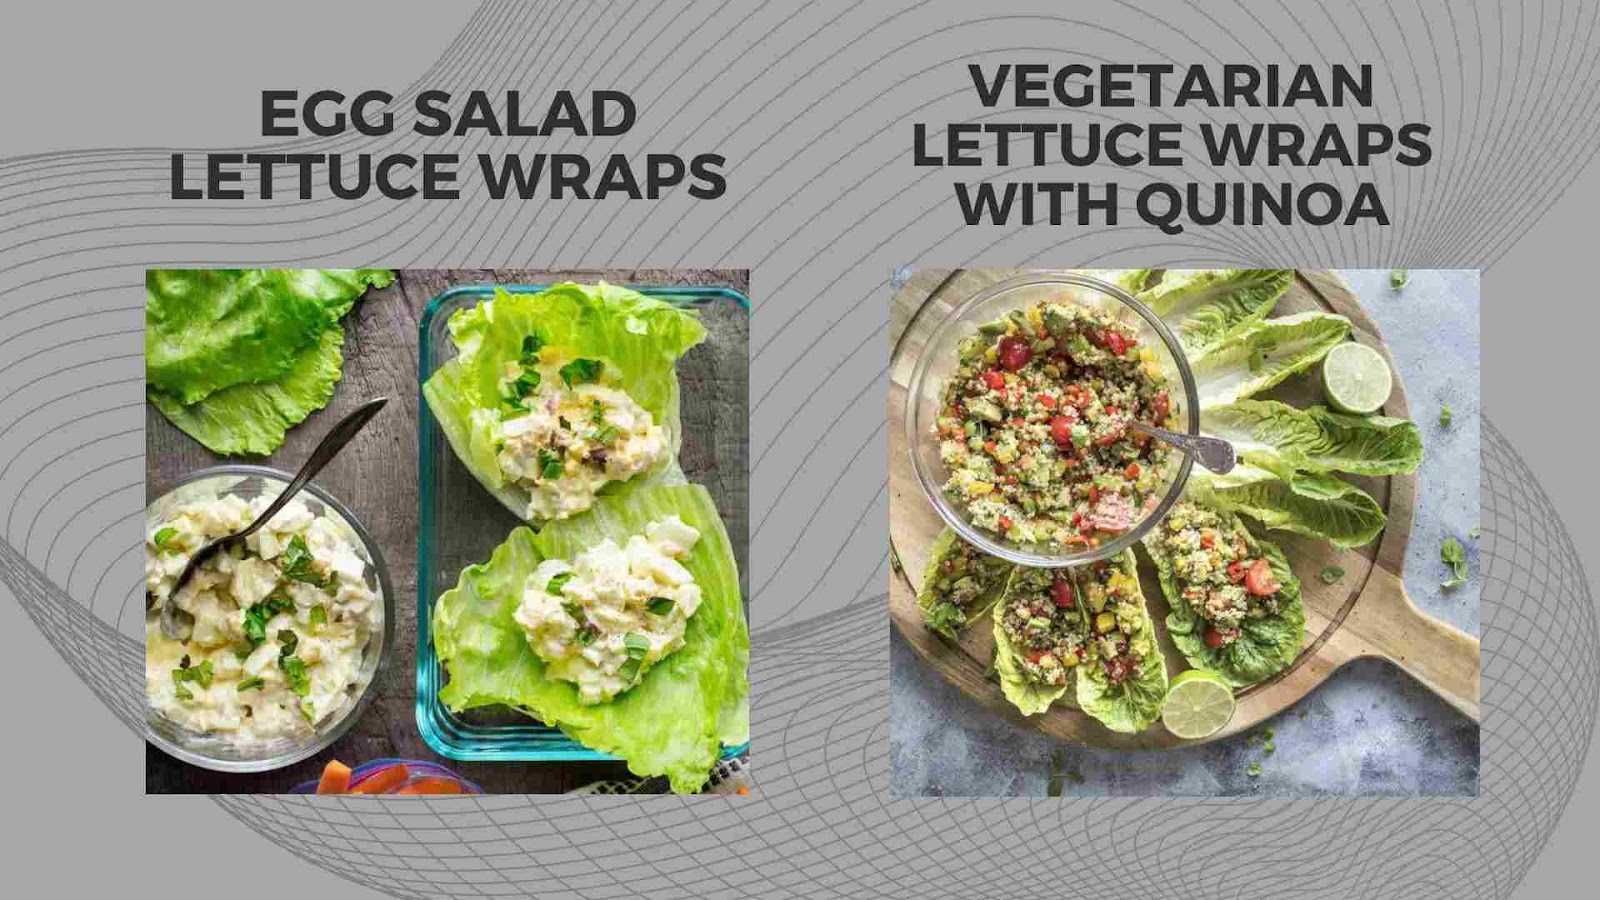 Egg Salad Lettuce Wraps & Quinoa Vegetarian Lettuce Wrap